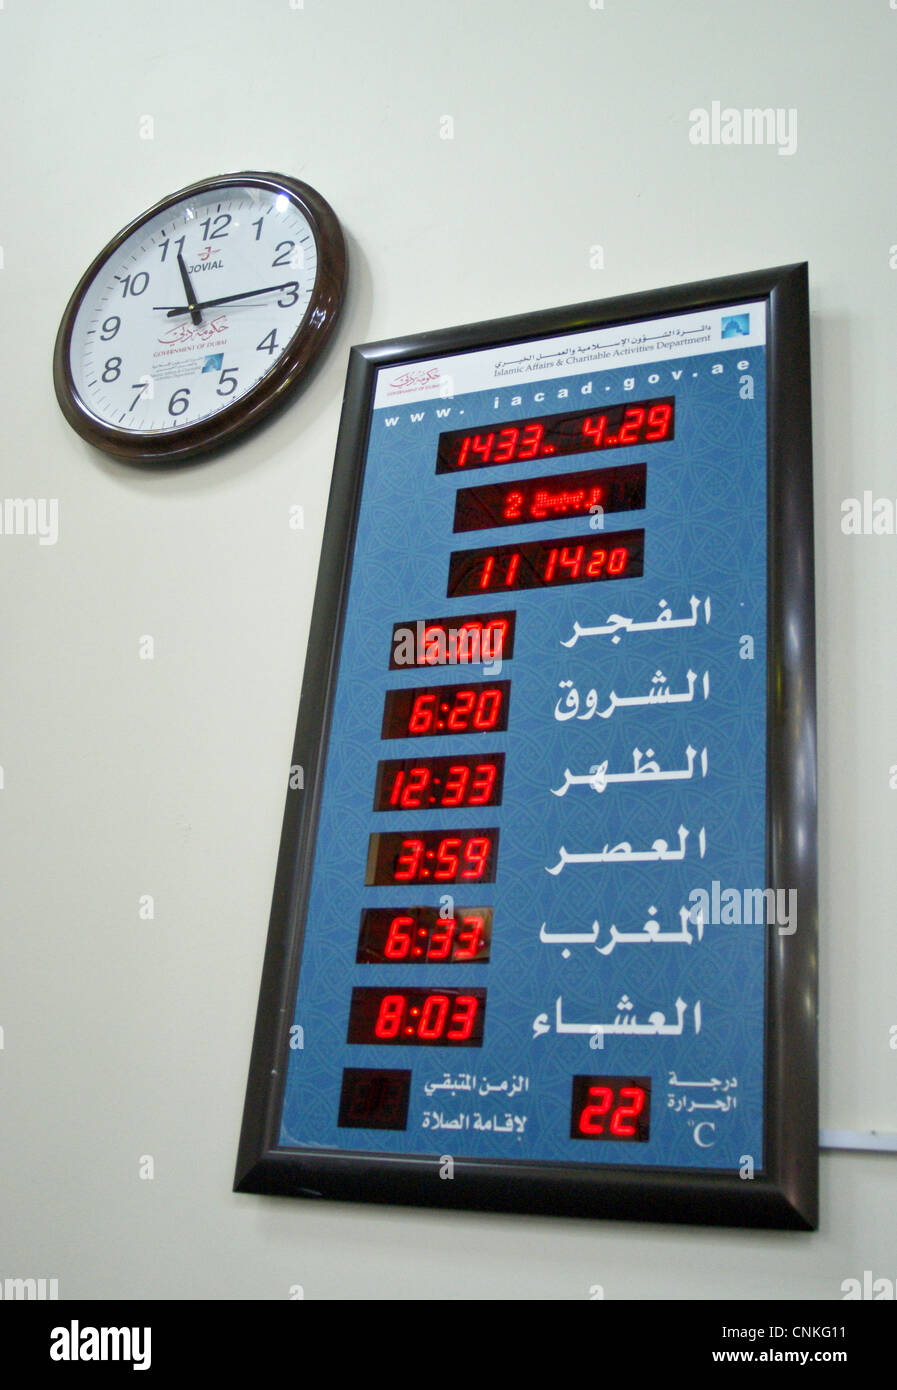 Islamic prayer clock hi-res stock photography and images - Alamy